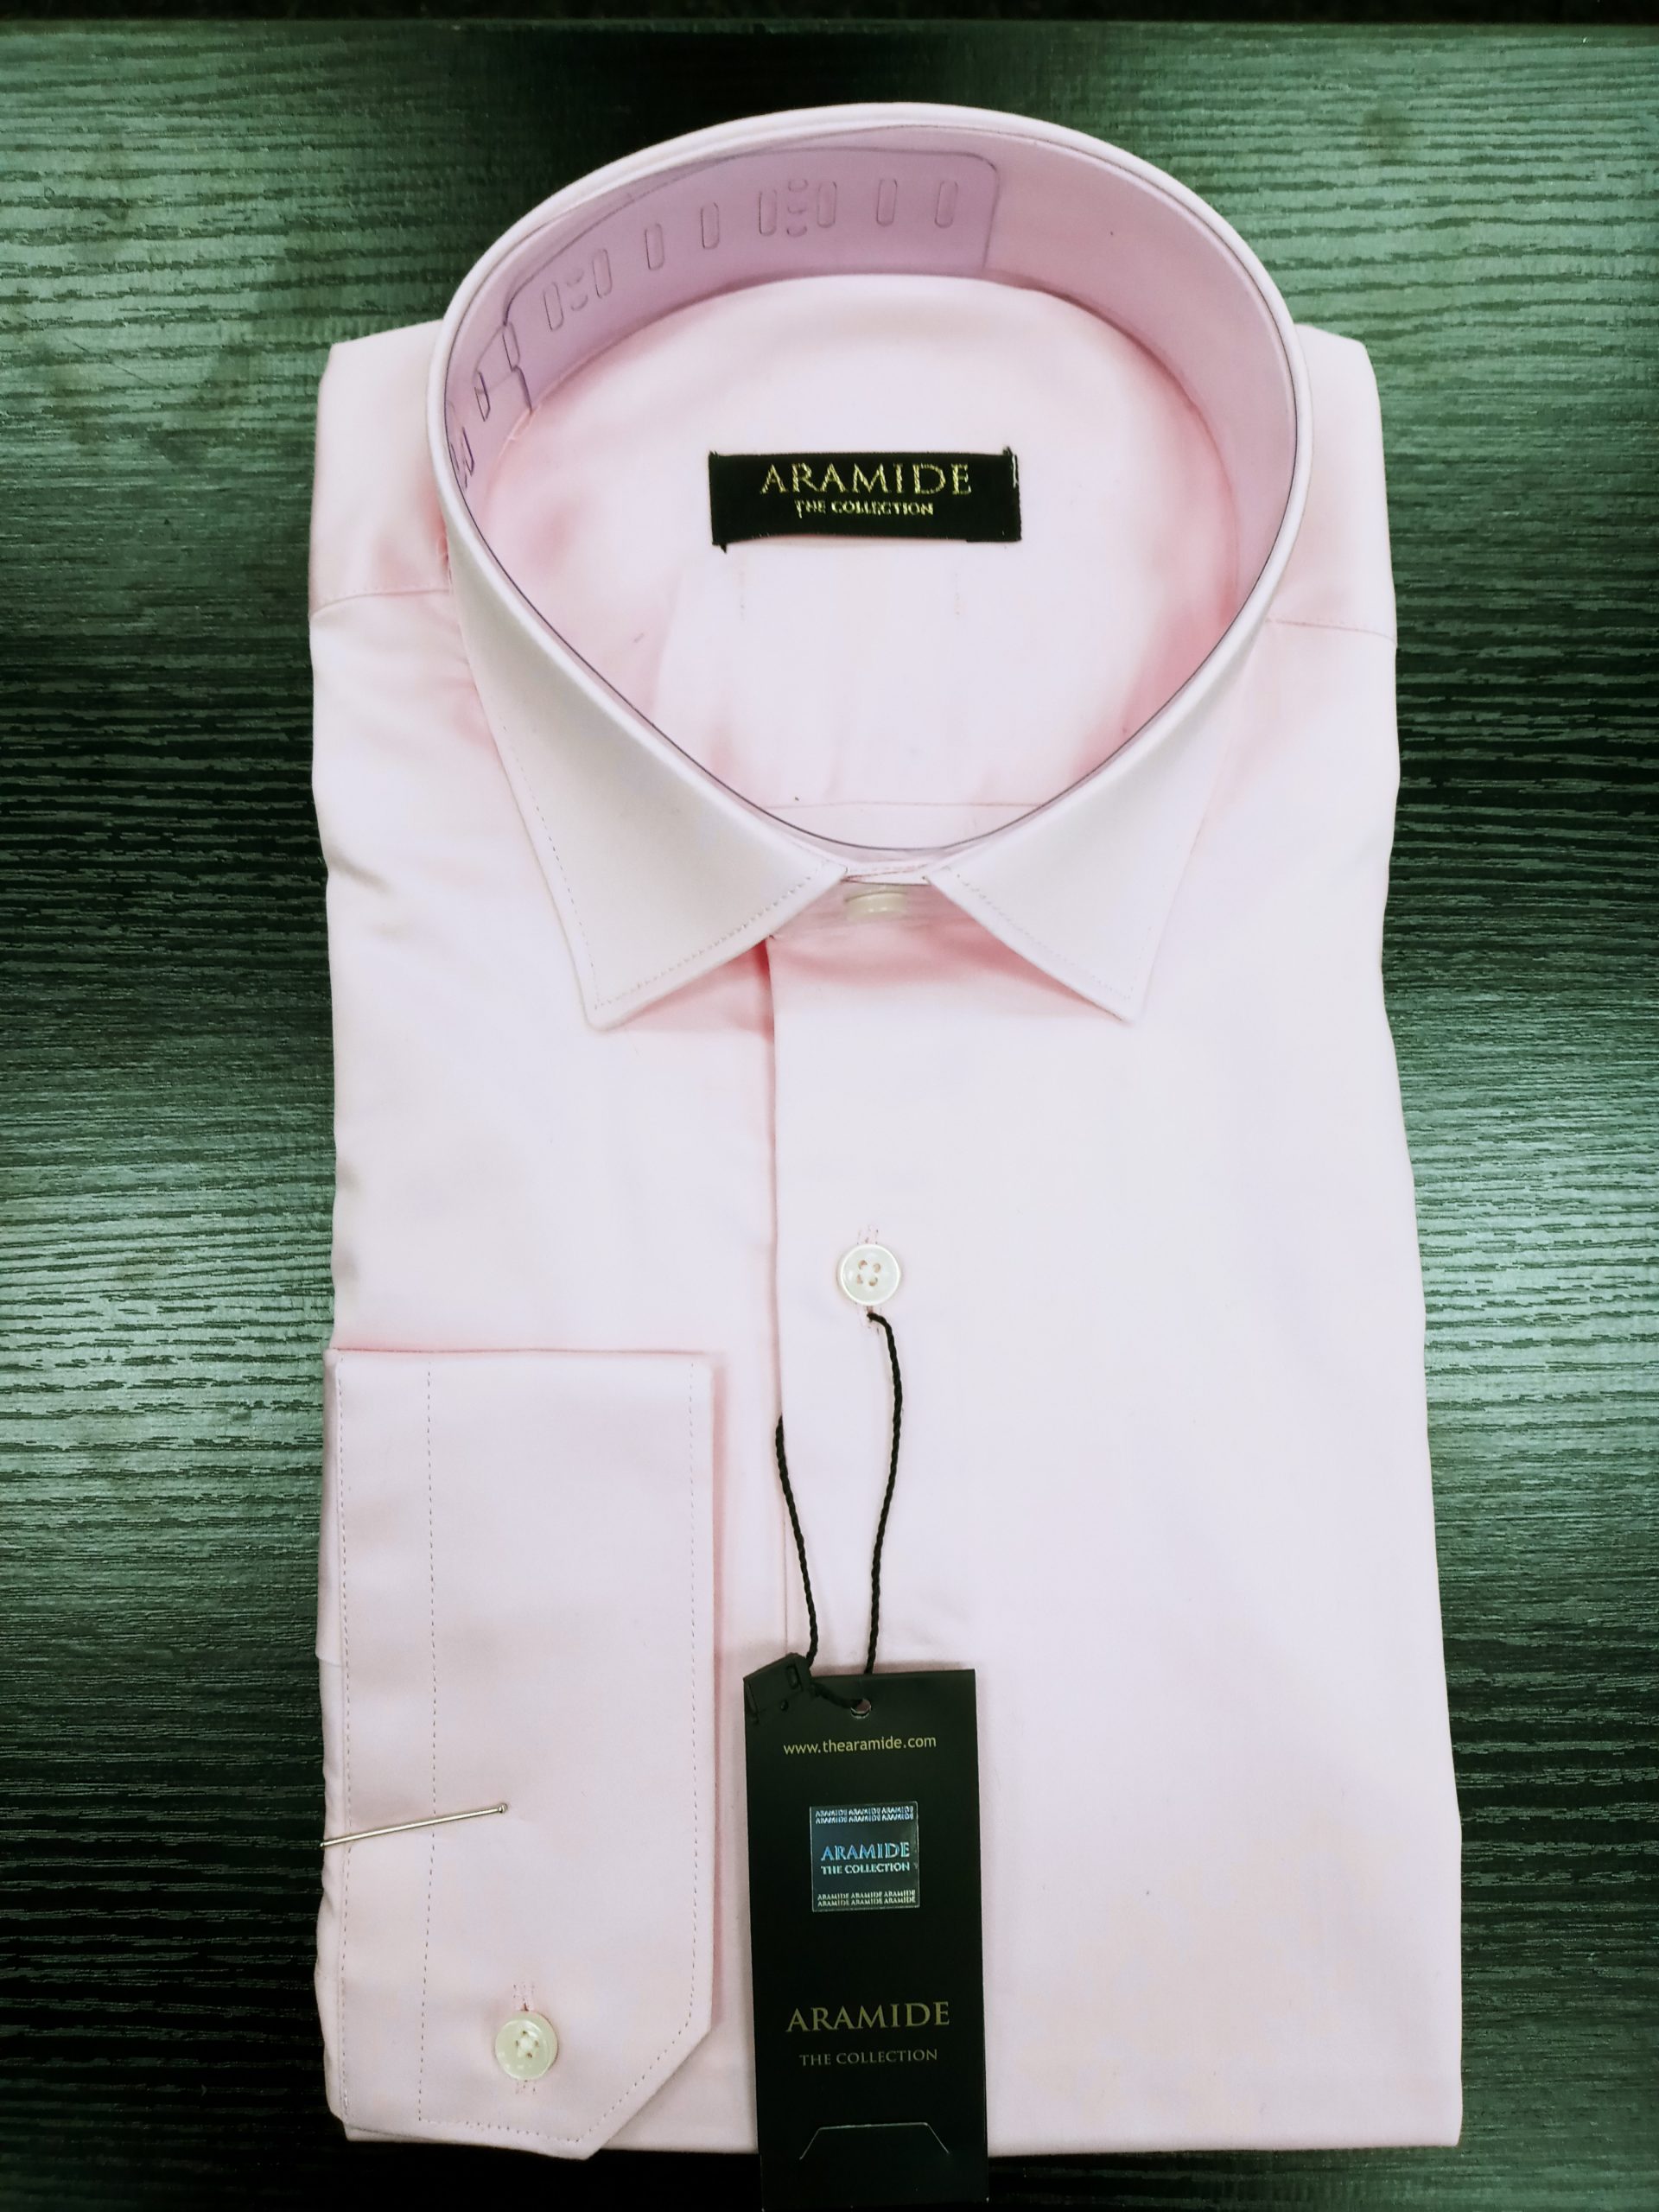 ARAMIDE Pink Shirt The Store of Quality Fashion Items | thearamide.com ...